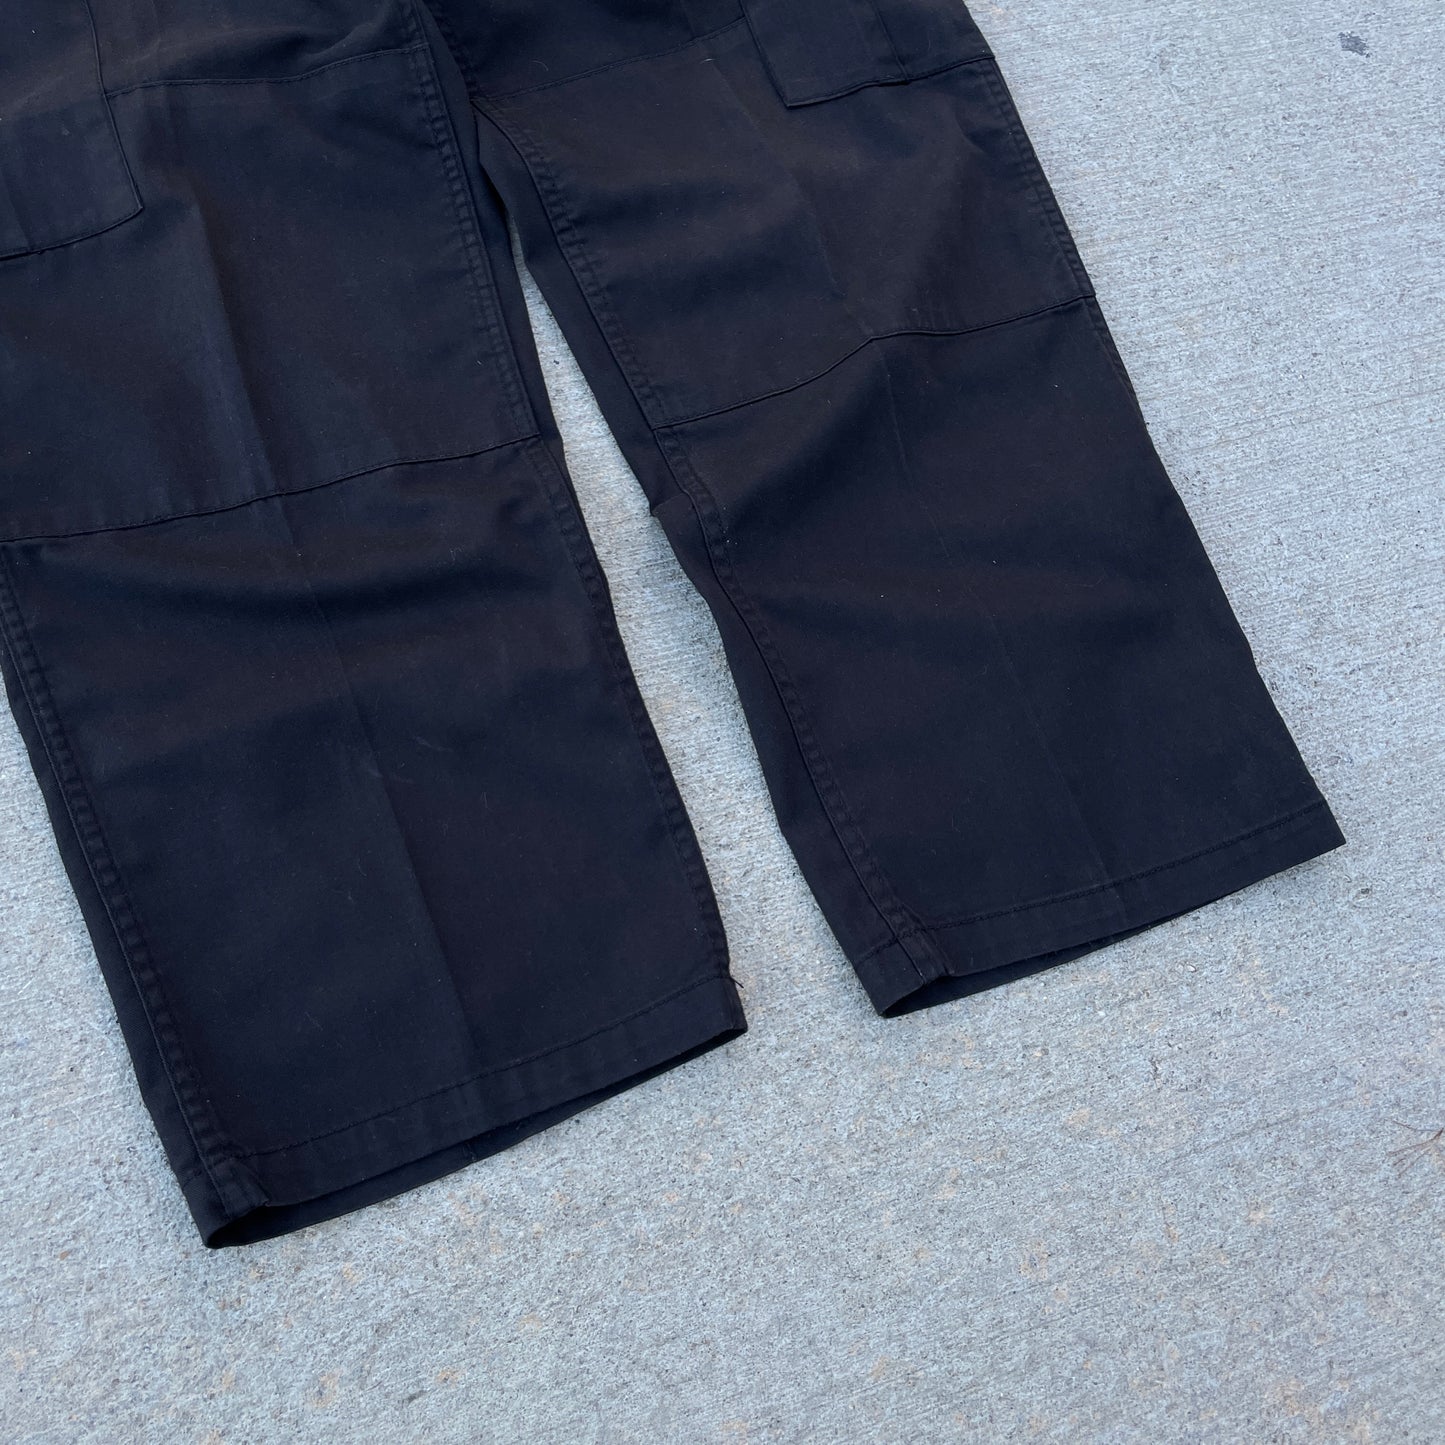 1990s Black Military Cargo Pants [30-34x30]